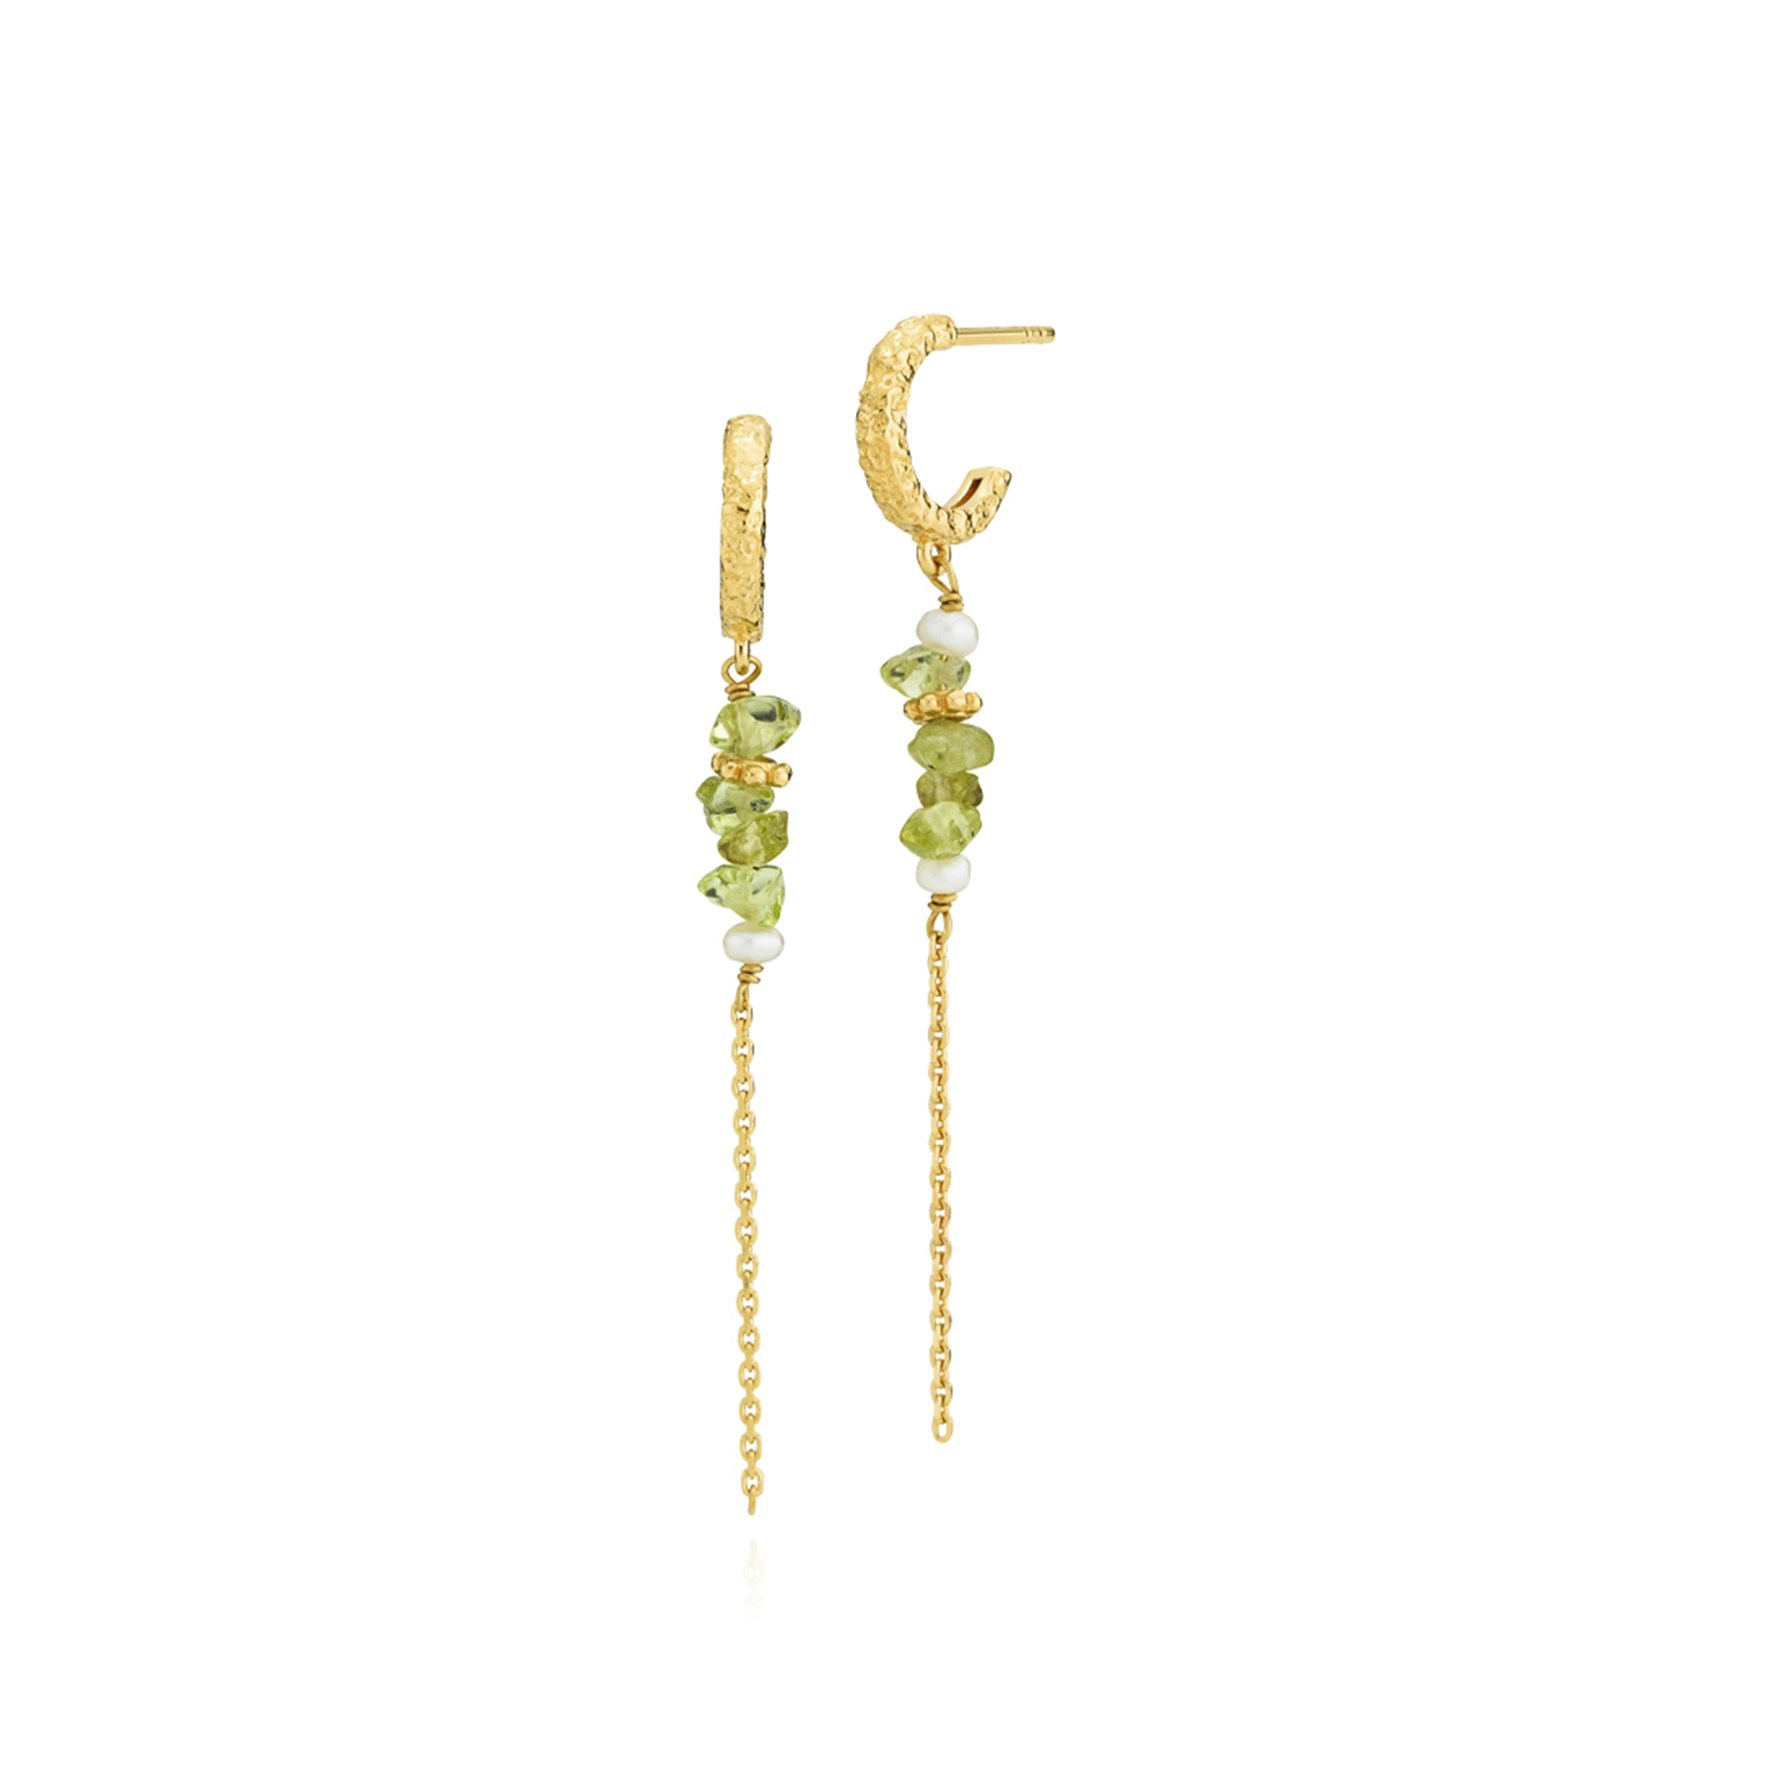 Beach Green Earrings from Sistie in Goldplated Silver Sterling 925